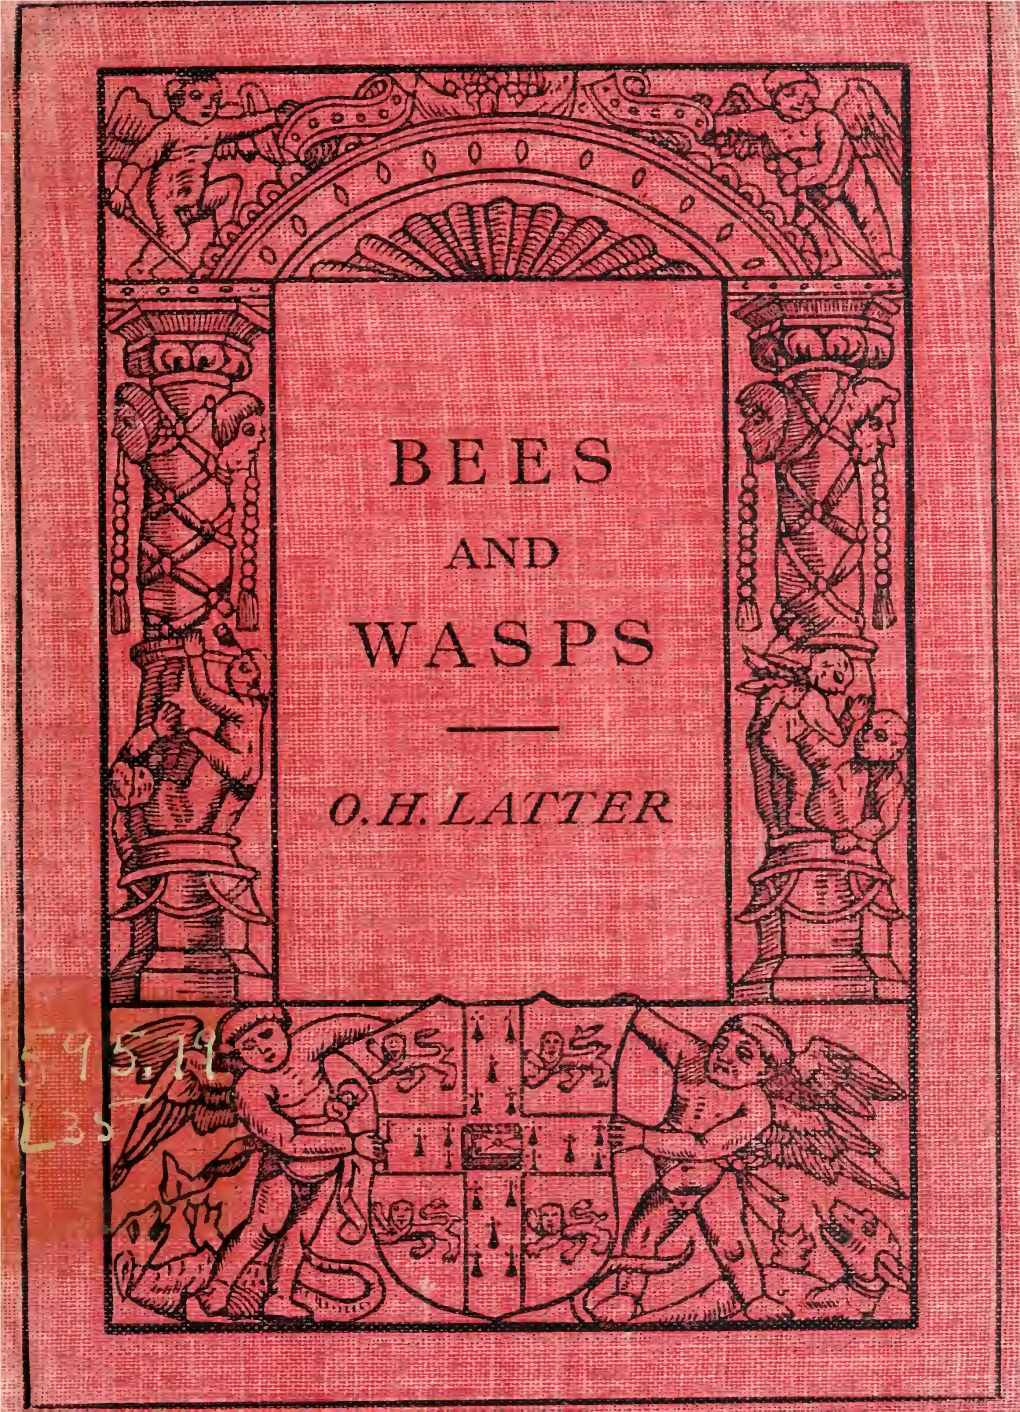 BEES and WASPS CAMBRIDGE UNIVERSITY PRESS Eonuon: FETTER LANE, E.G